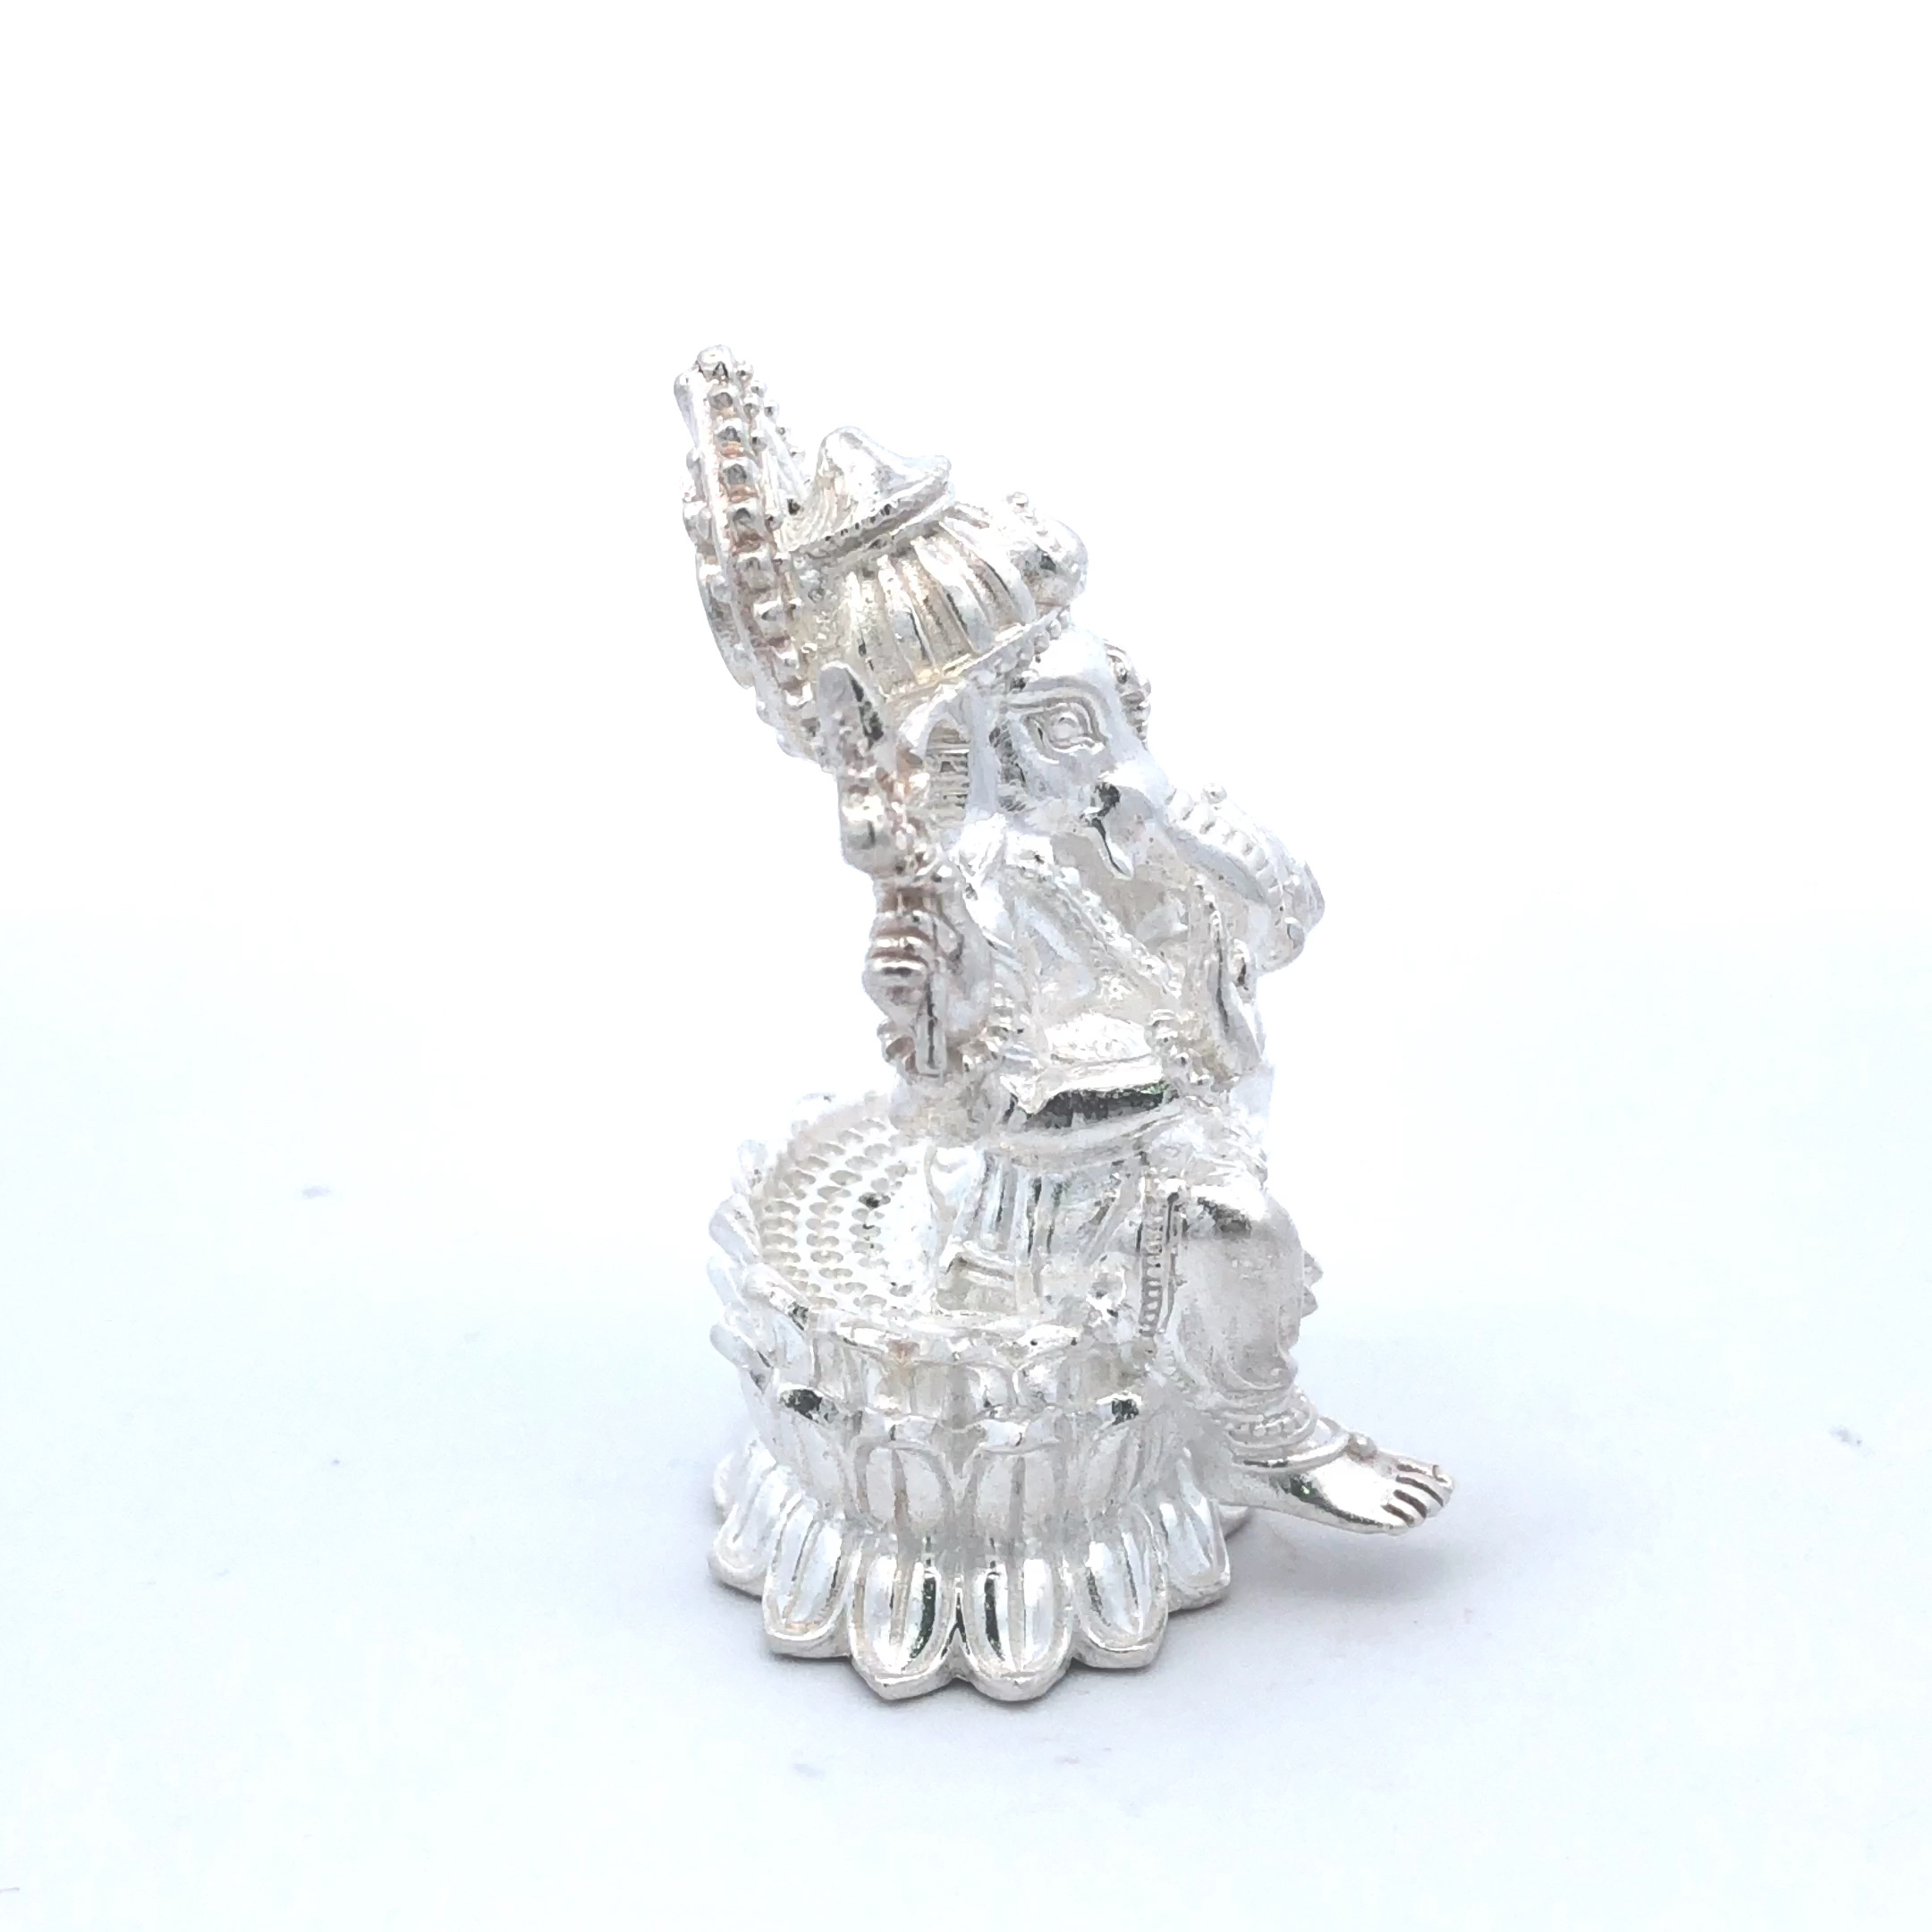 Pure silver ganesh idol for pooja